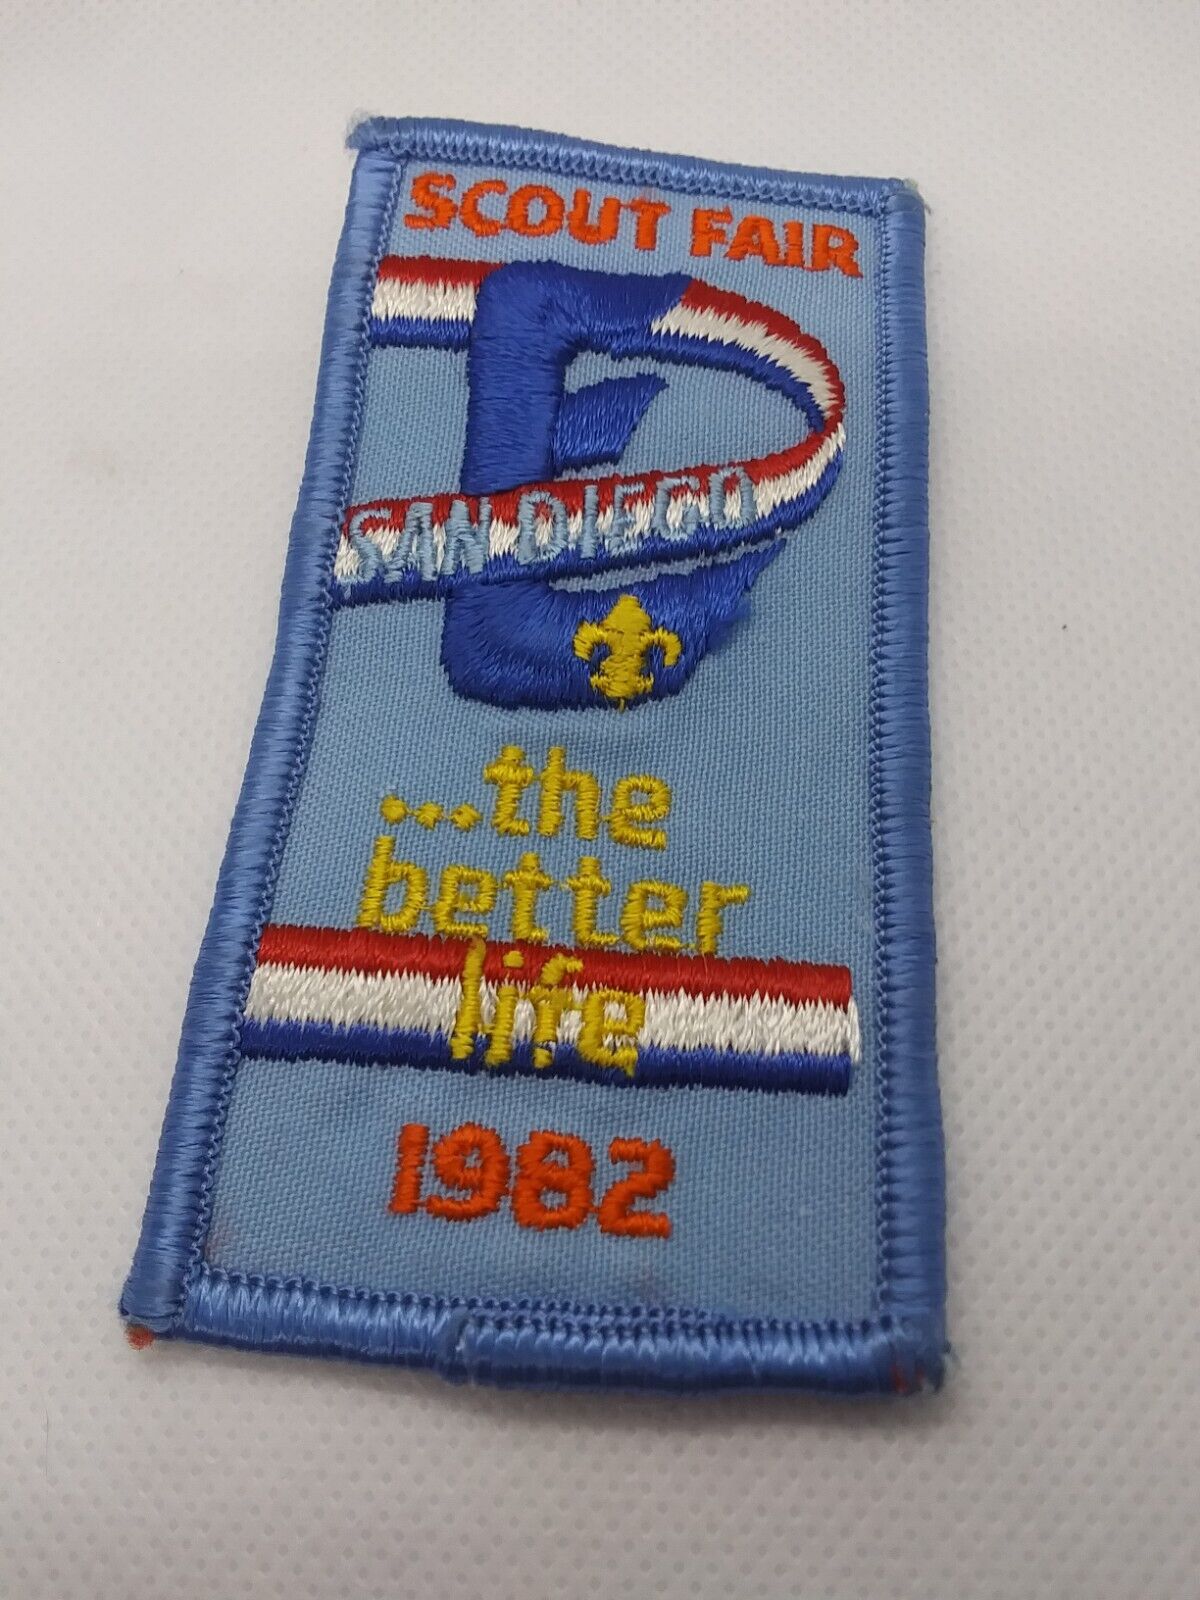 Vintage 1982 BSA Scout Fair San Diego The Better Life Patch